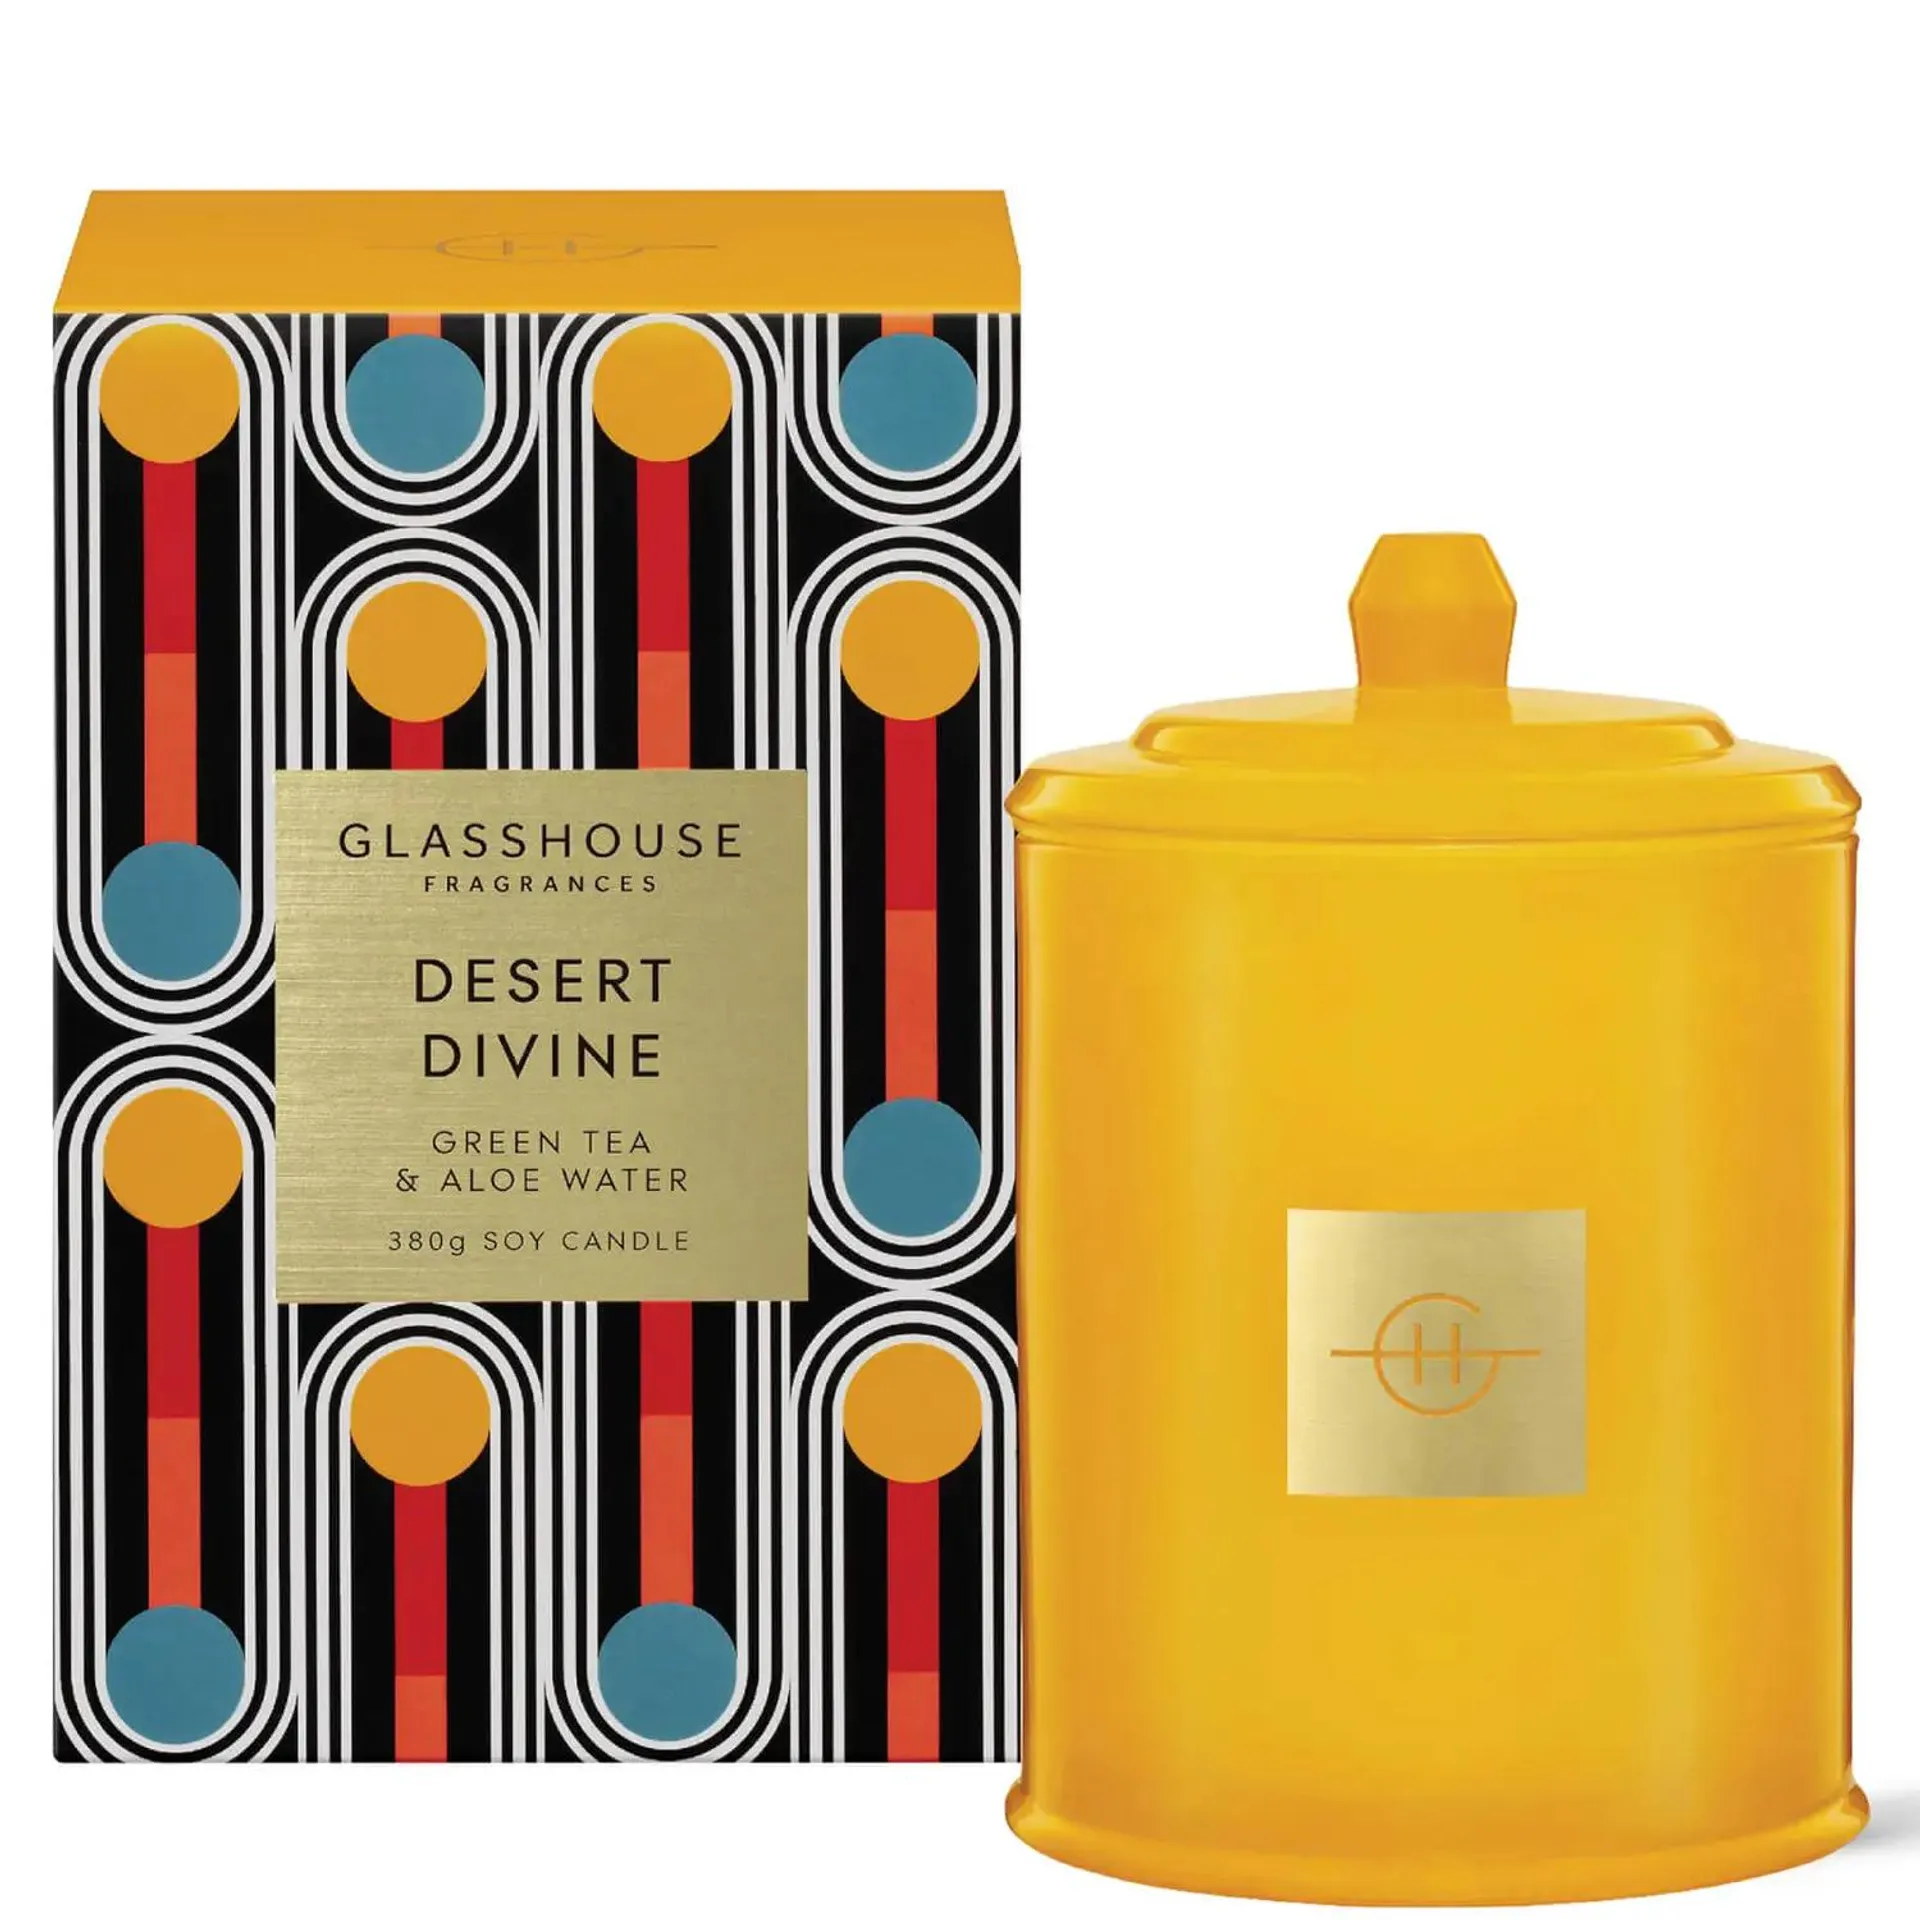 Glasshouse Fragrances Desert Divine Candle 380g